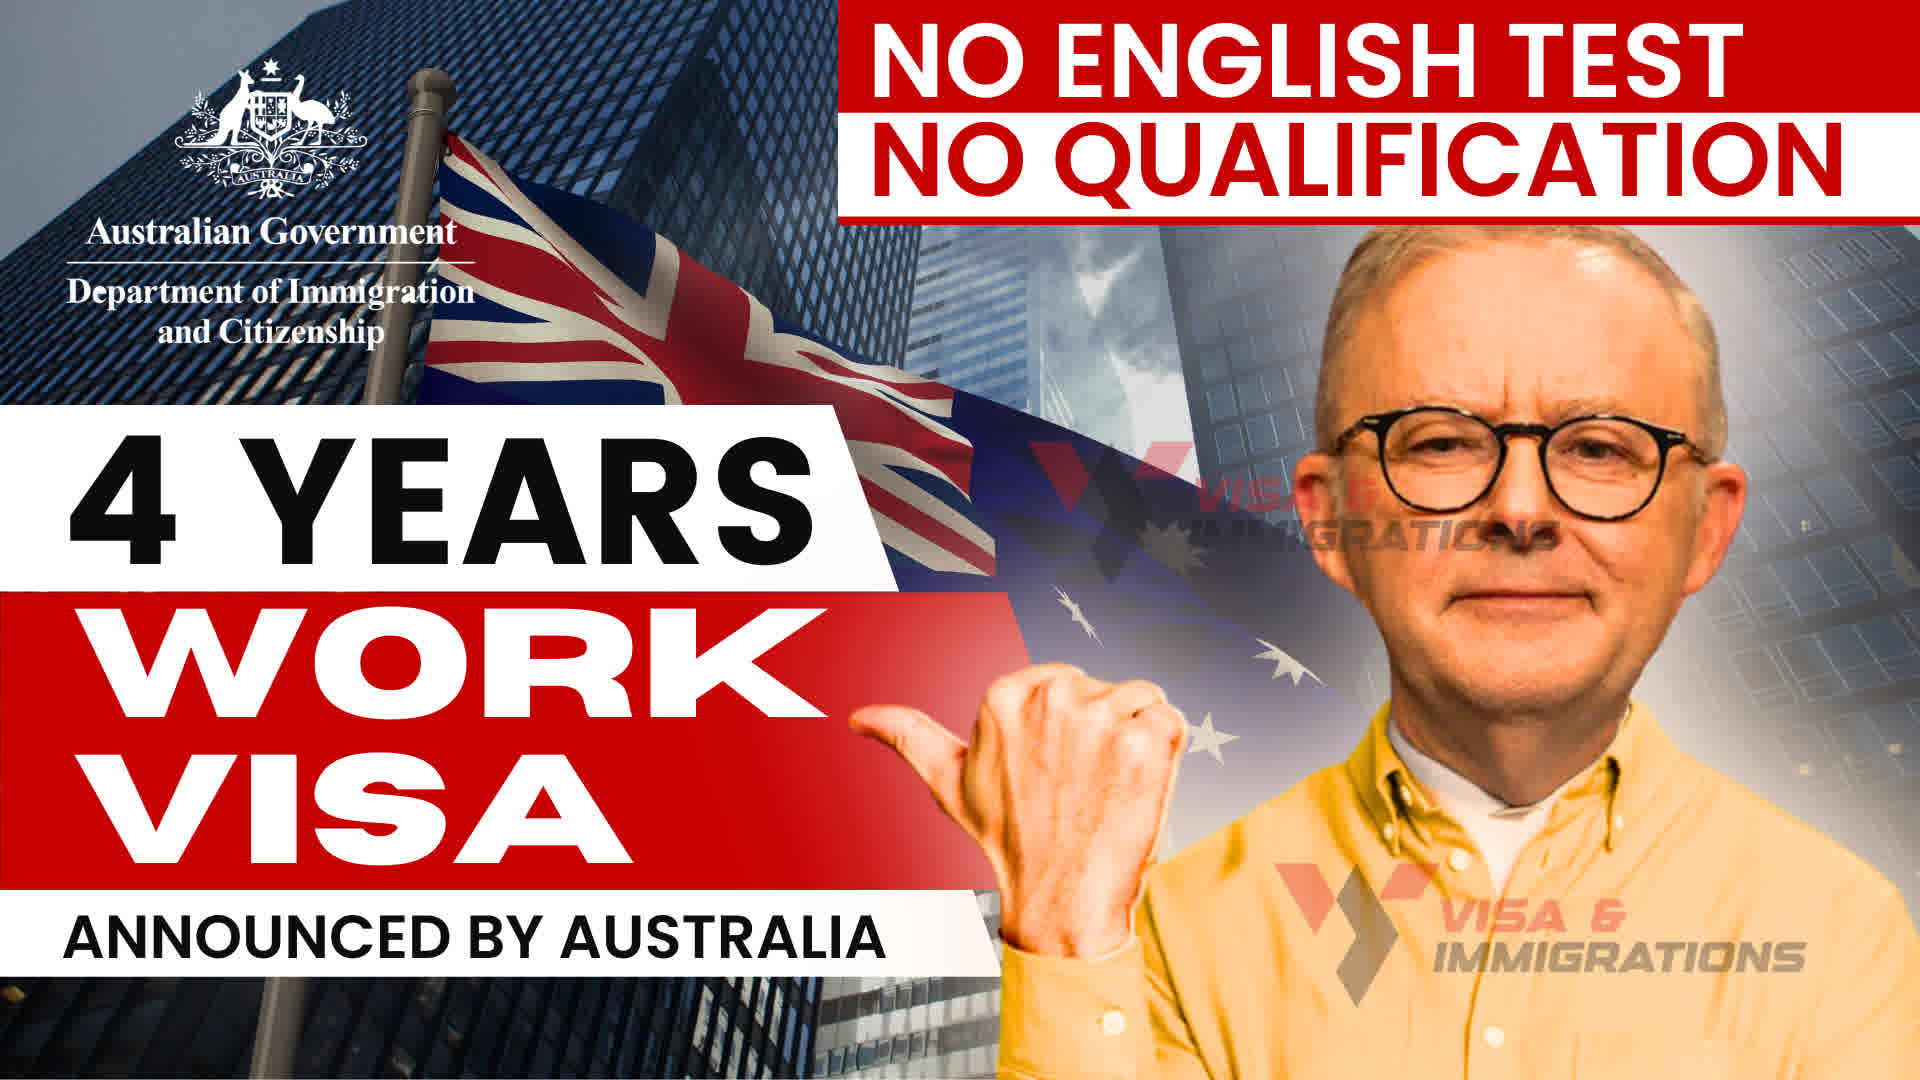 4 years work visa announced by Australia 1